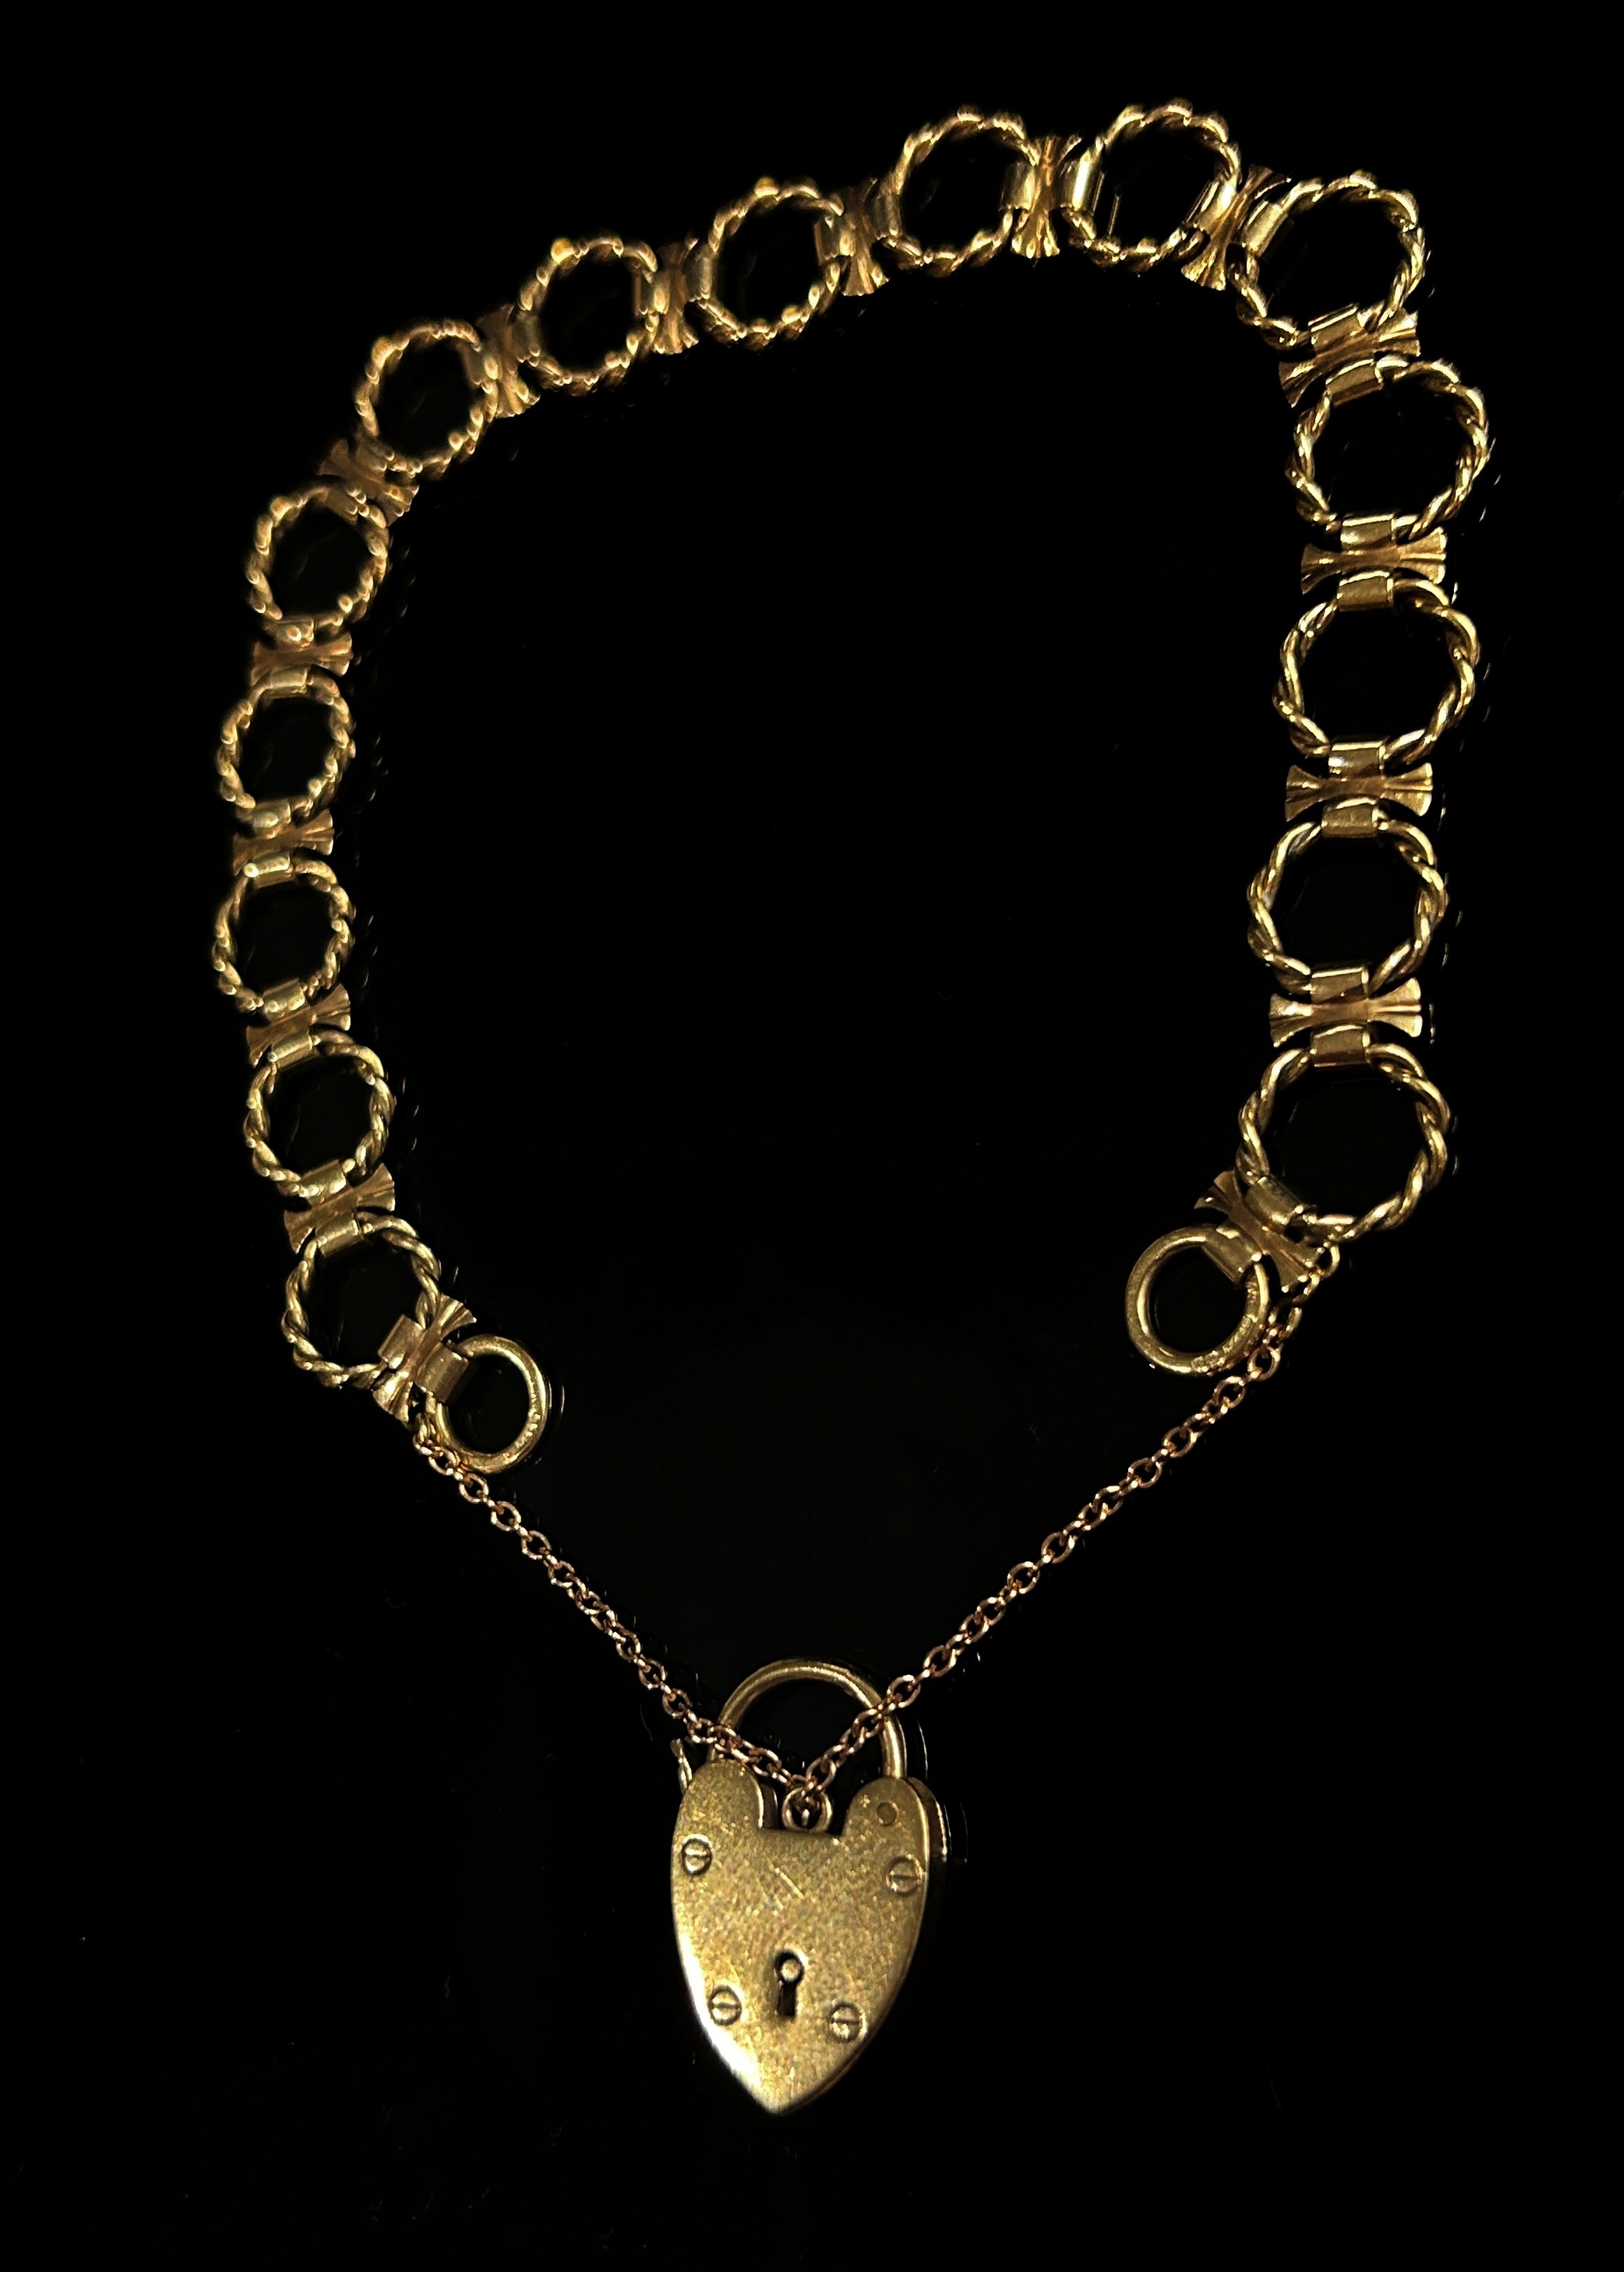 Vintage 9ct fancy link bracelet with heart padlock clasp, 10.8g - Image 3 of 4